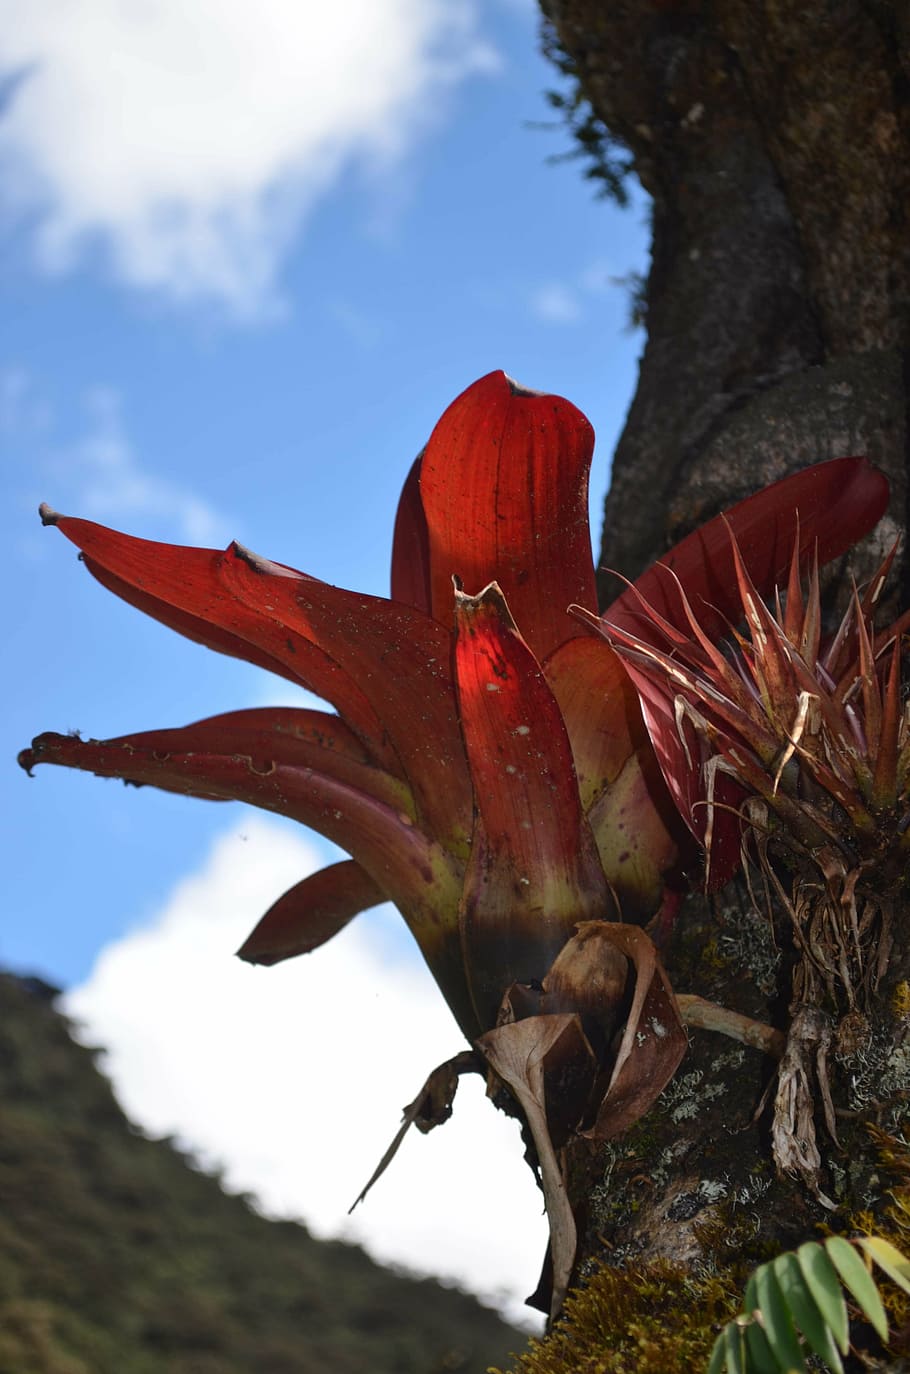 bromelia, bromeliaceae, montane forest, peruvian biodiversity, peruvian amazon biodiversity, plant, red, flower, flowering plant, nature